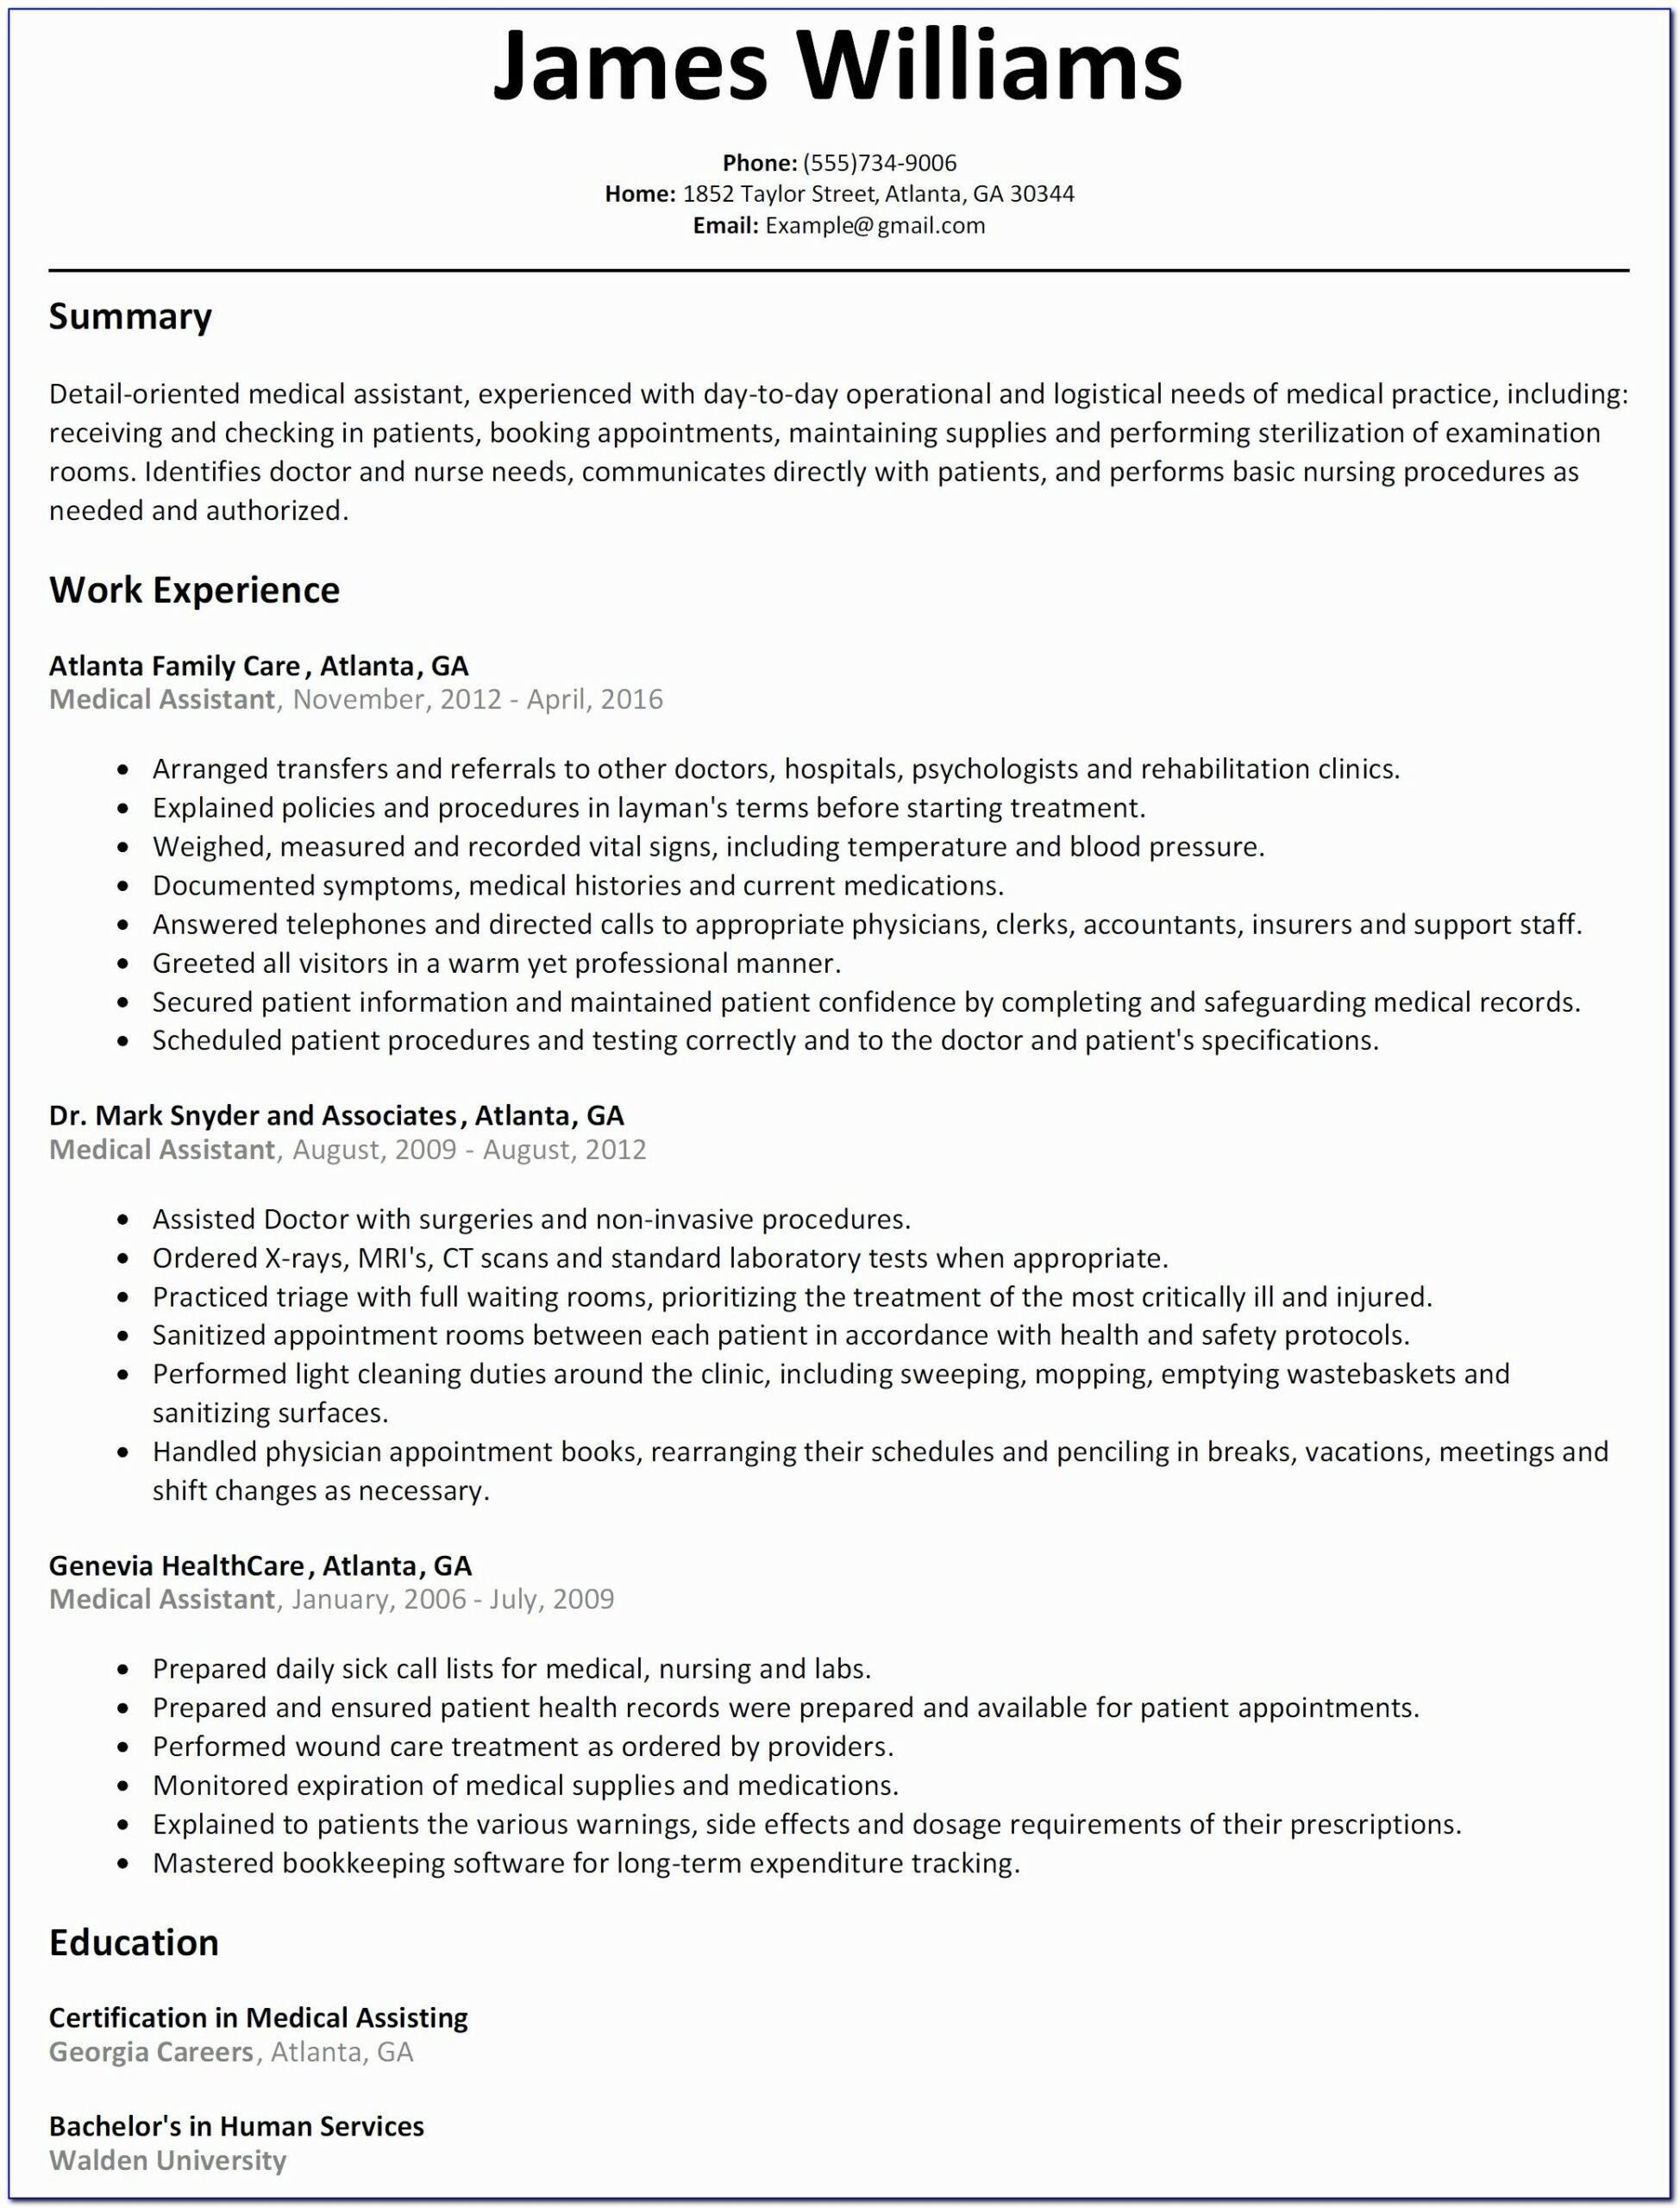 Freelance Resume Writer Job Description